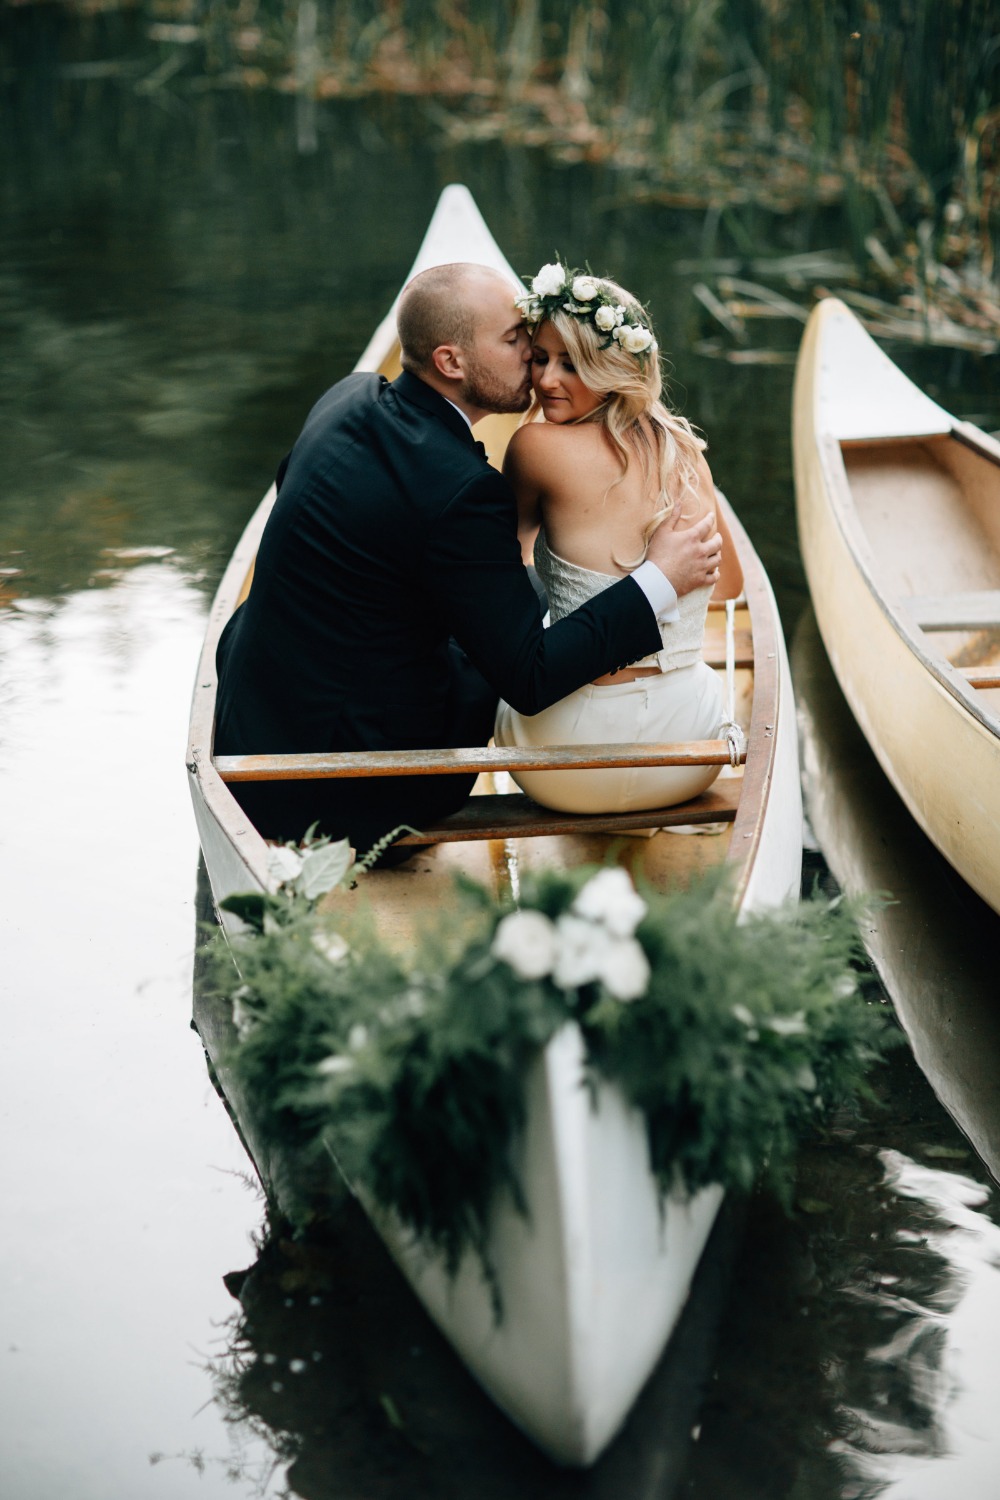 Wedding canoe photo ideas